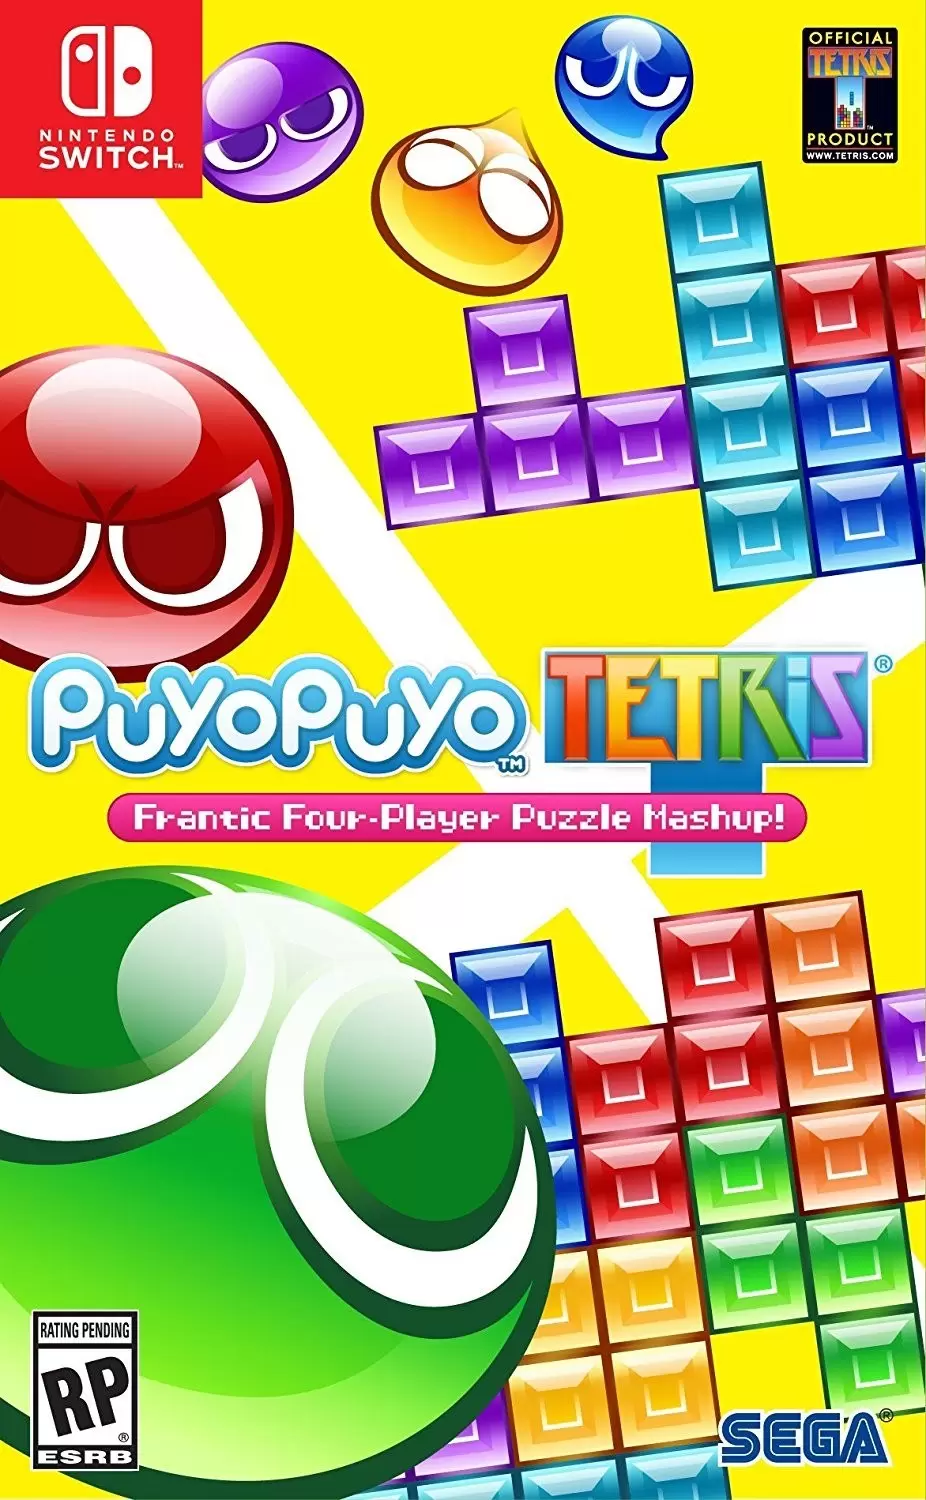 Nintendo Switch Games - Puyo Puyo Tetris